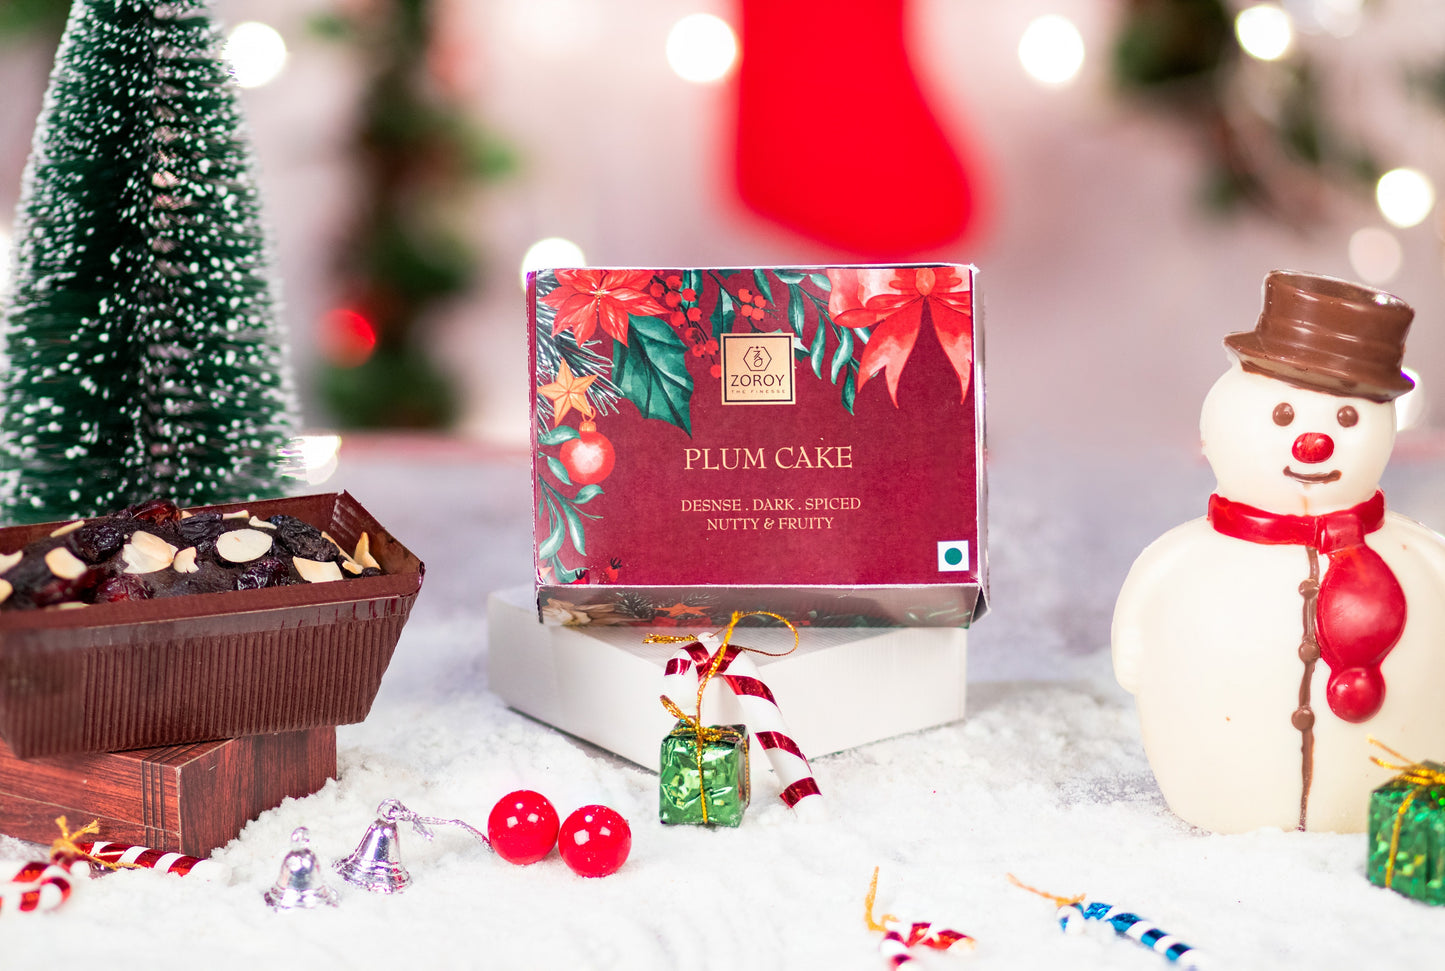 ZOROY LUXURY CHOCOLATE Christmas Trio Gift Hamper Combo For Celebration Festival Corporate Weeding X Mas Family Surprise New Year Kids Online Chocolate Gift Box